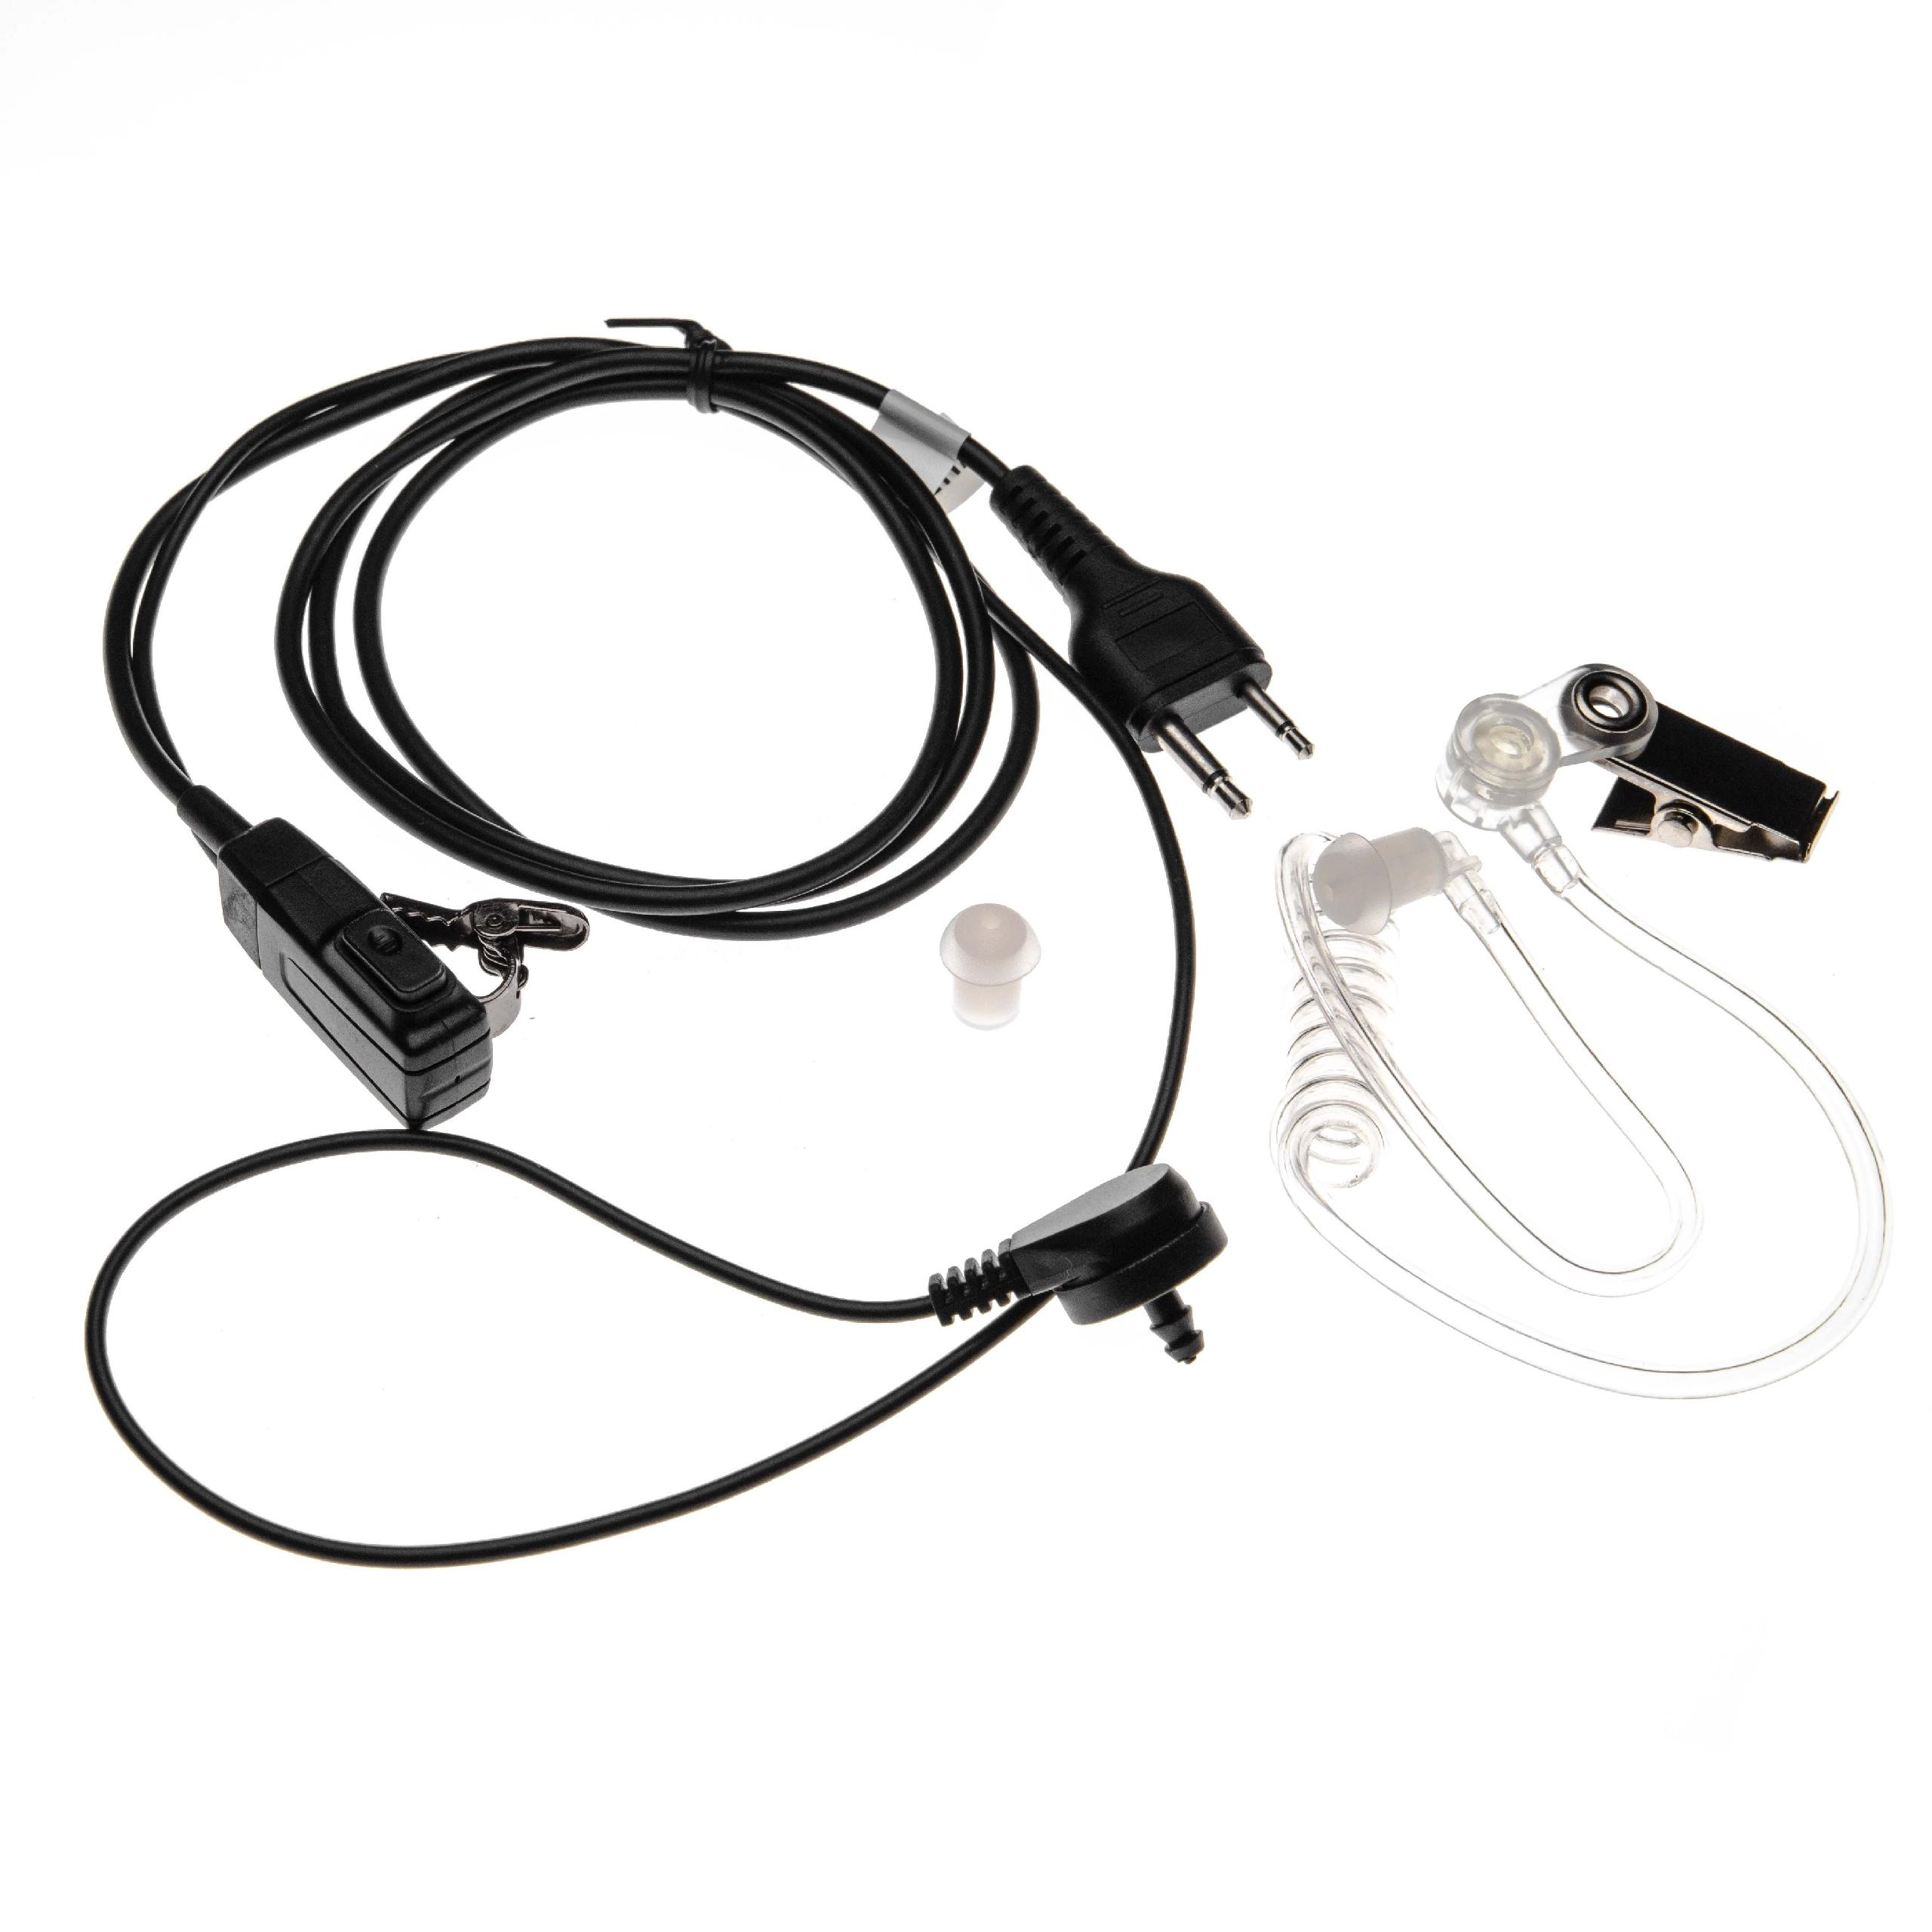 IC-02E, On-ear IC-03A, IC-02AT, Headset VHBW mit schwarz Icom transparent IC-04E, IC-02A, IC-04AT, IC-02N, IC-03AT, 16e0, IC-04A, / kompatibel